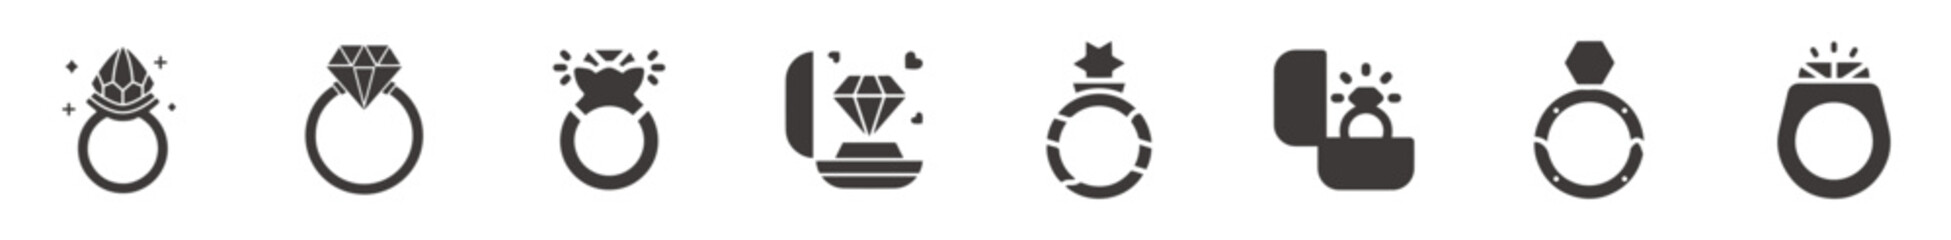 A set of Diamond ring Icon Vector. Diamond sign icon. Jewelry symbol. Gem stone. Graphic element. 